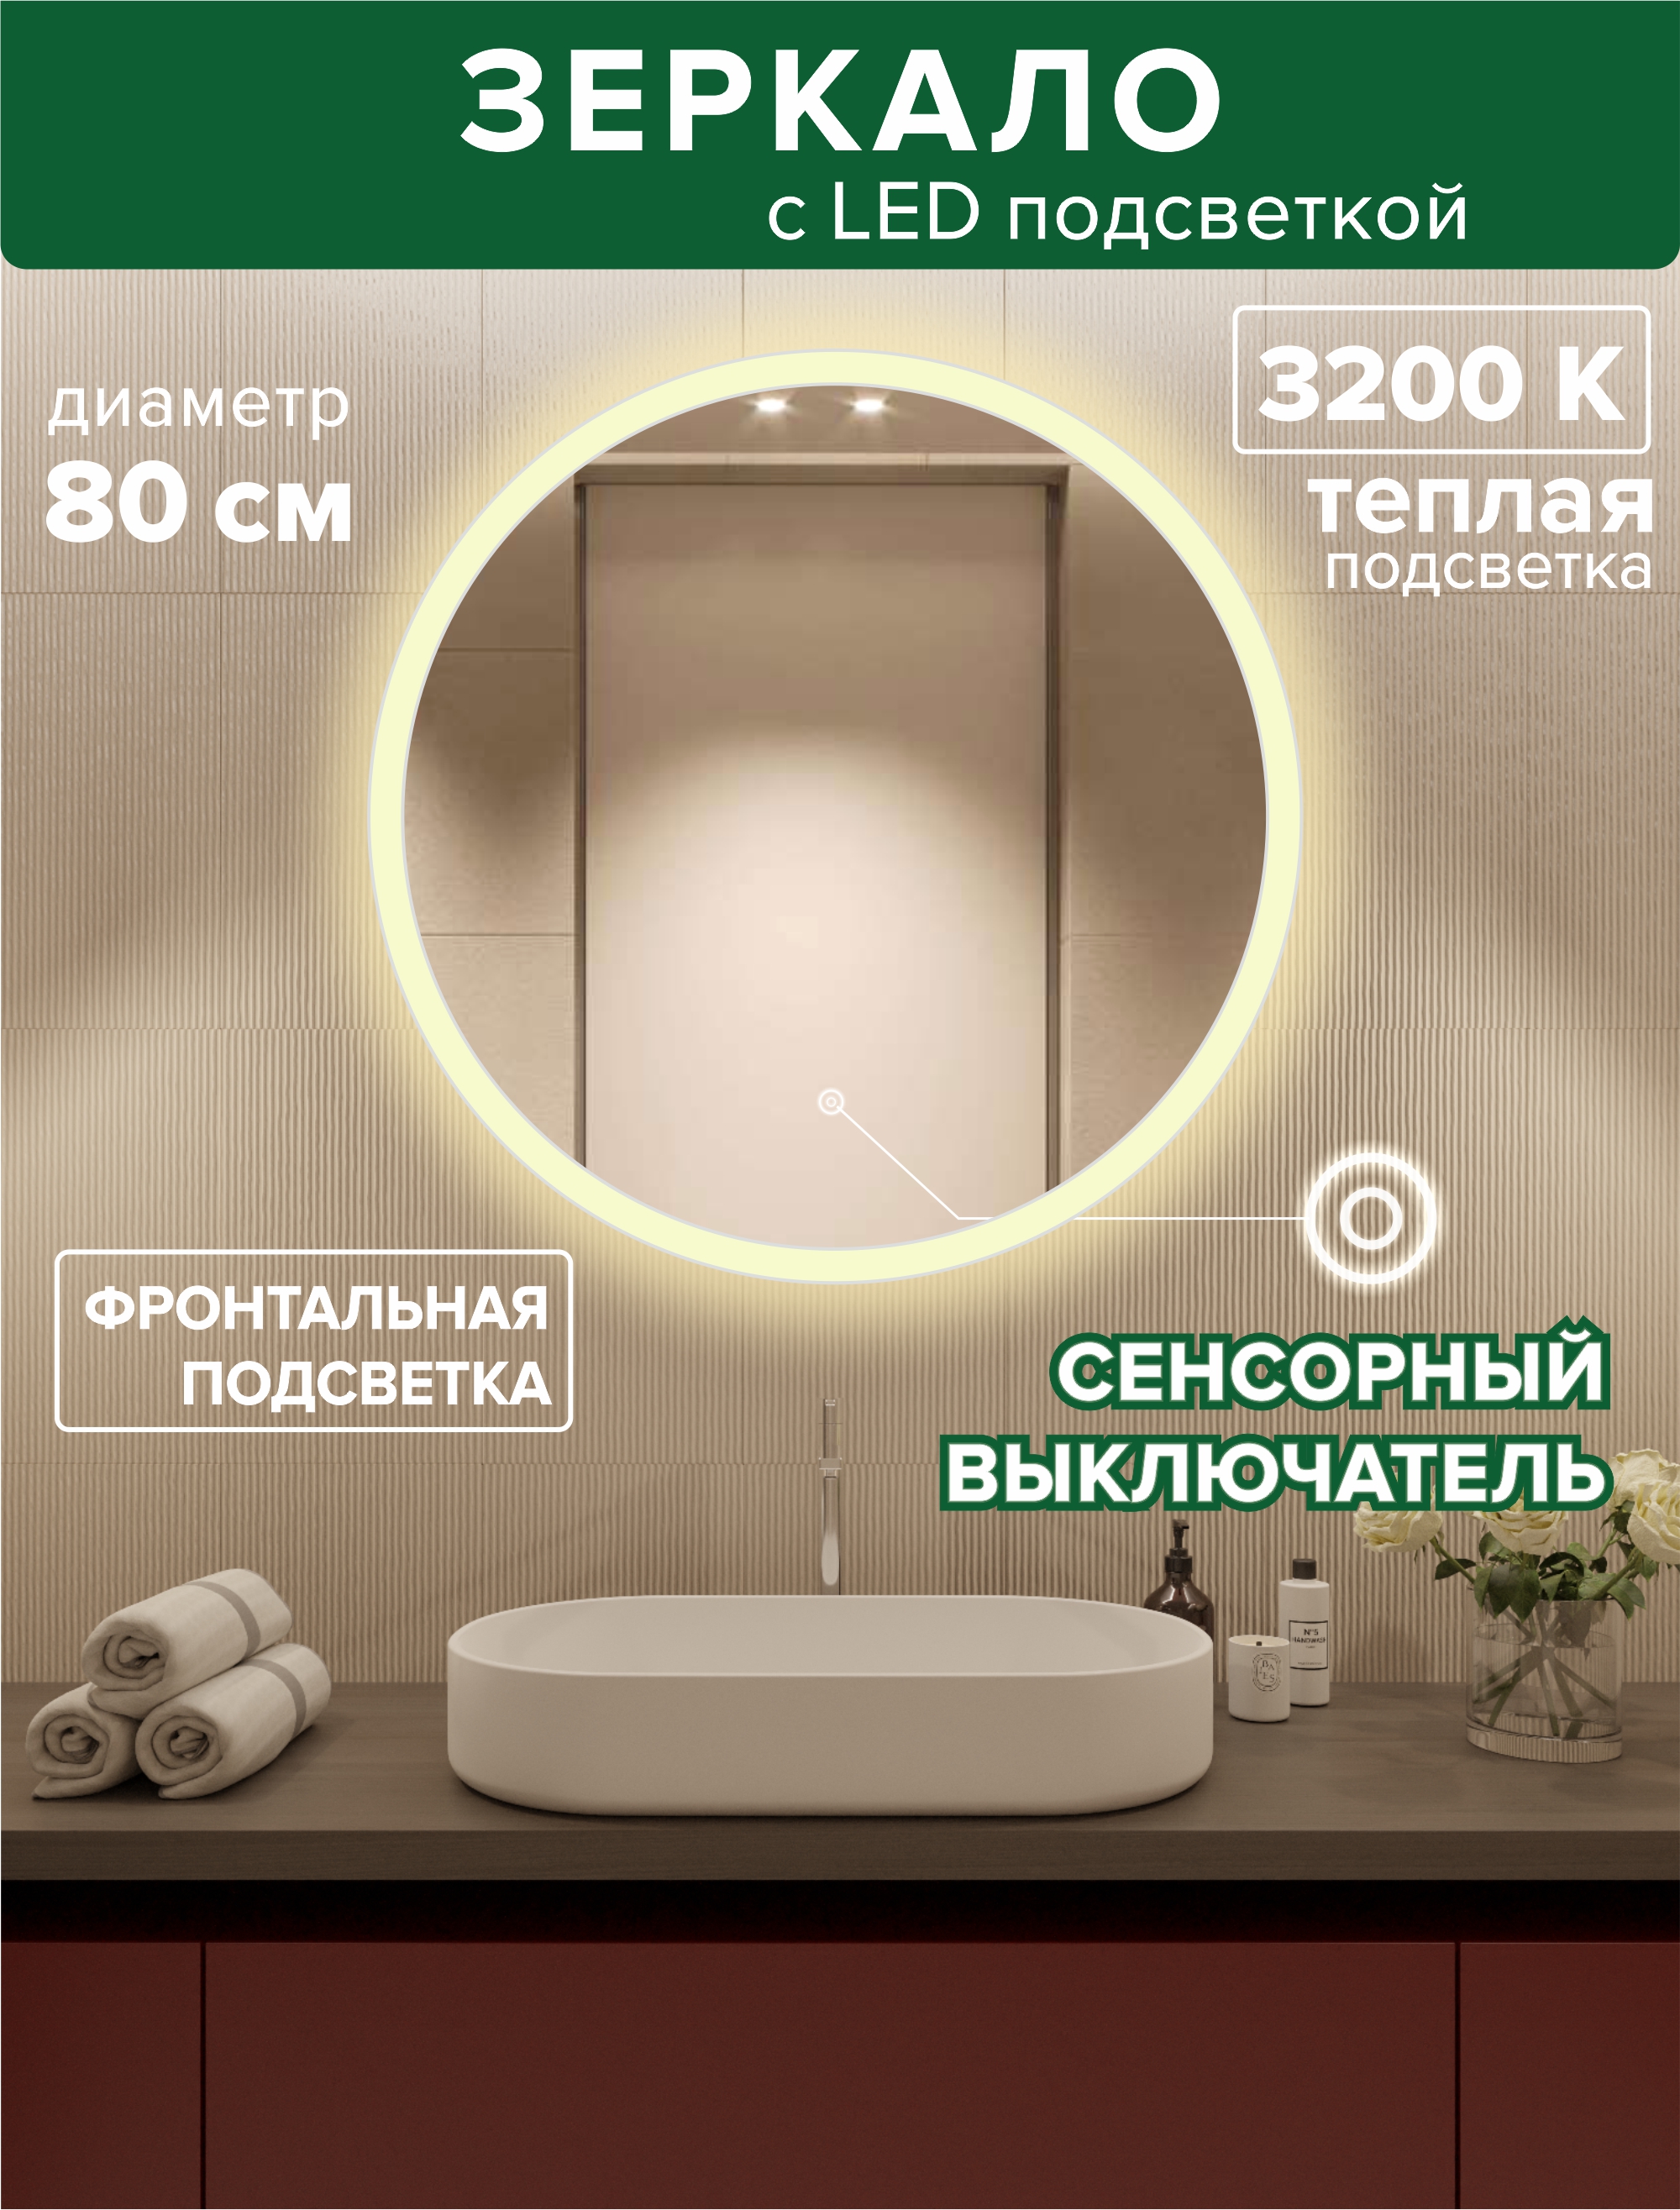 Зеркало для ванной Alfa Mirrors фронтальная теплая подсветка 3200К, круглое 80см, MSvet-8t led pls 200 20m 240v ww bl f w o белая теплая пров белый теплый flash без силового шнура